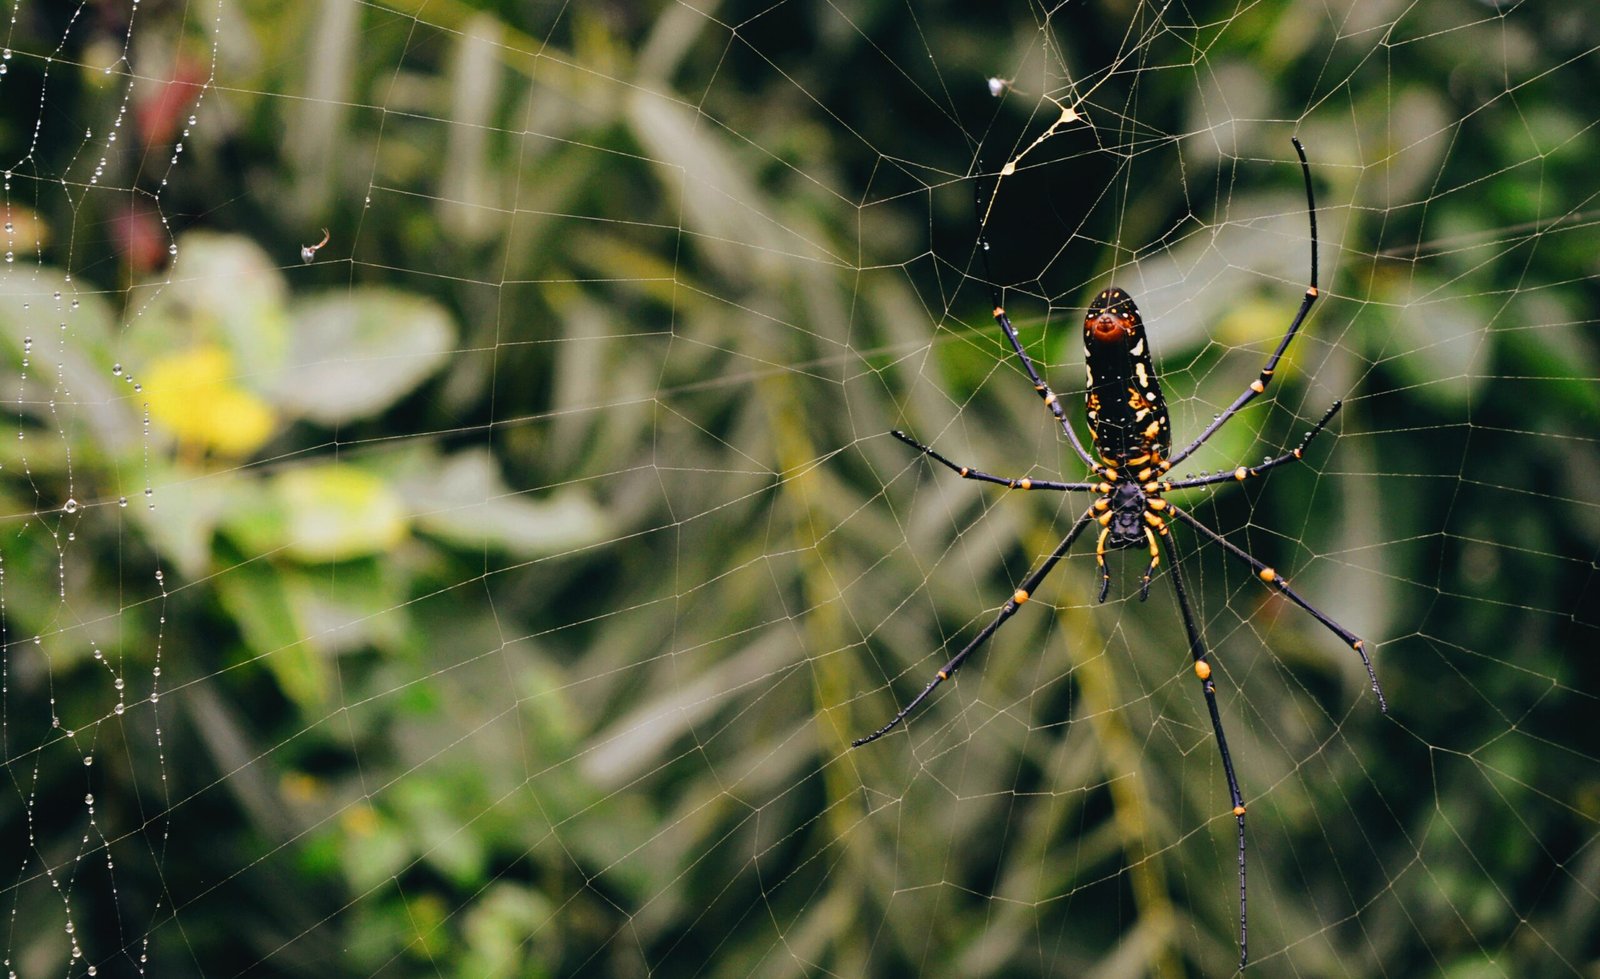 How Do Tarantulas Cope With Threats From Predatory Arachnids Like Tailless Whip Scorpions?